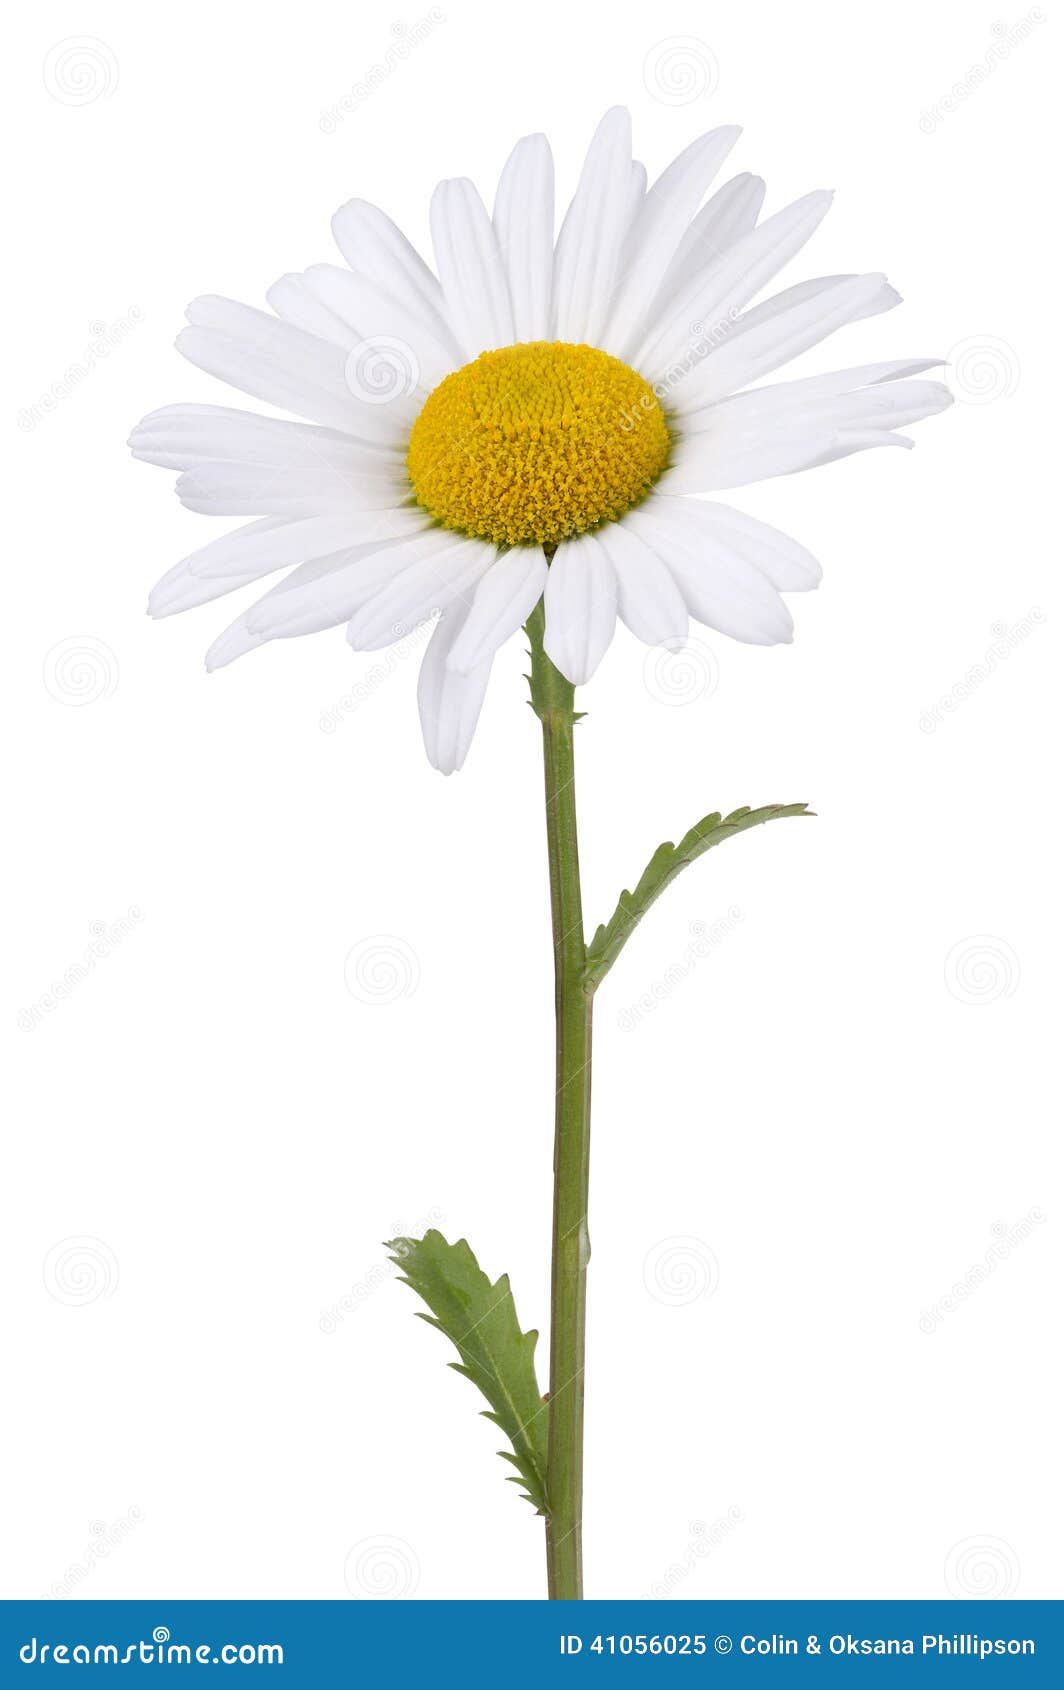 daisy  on white